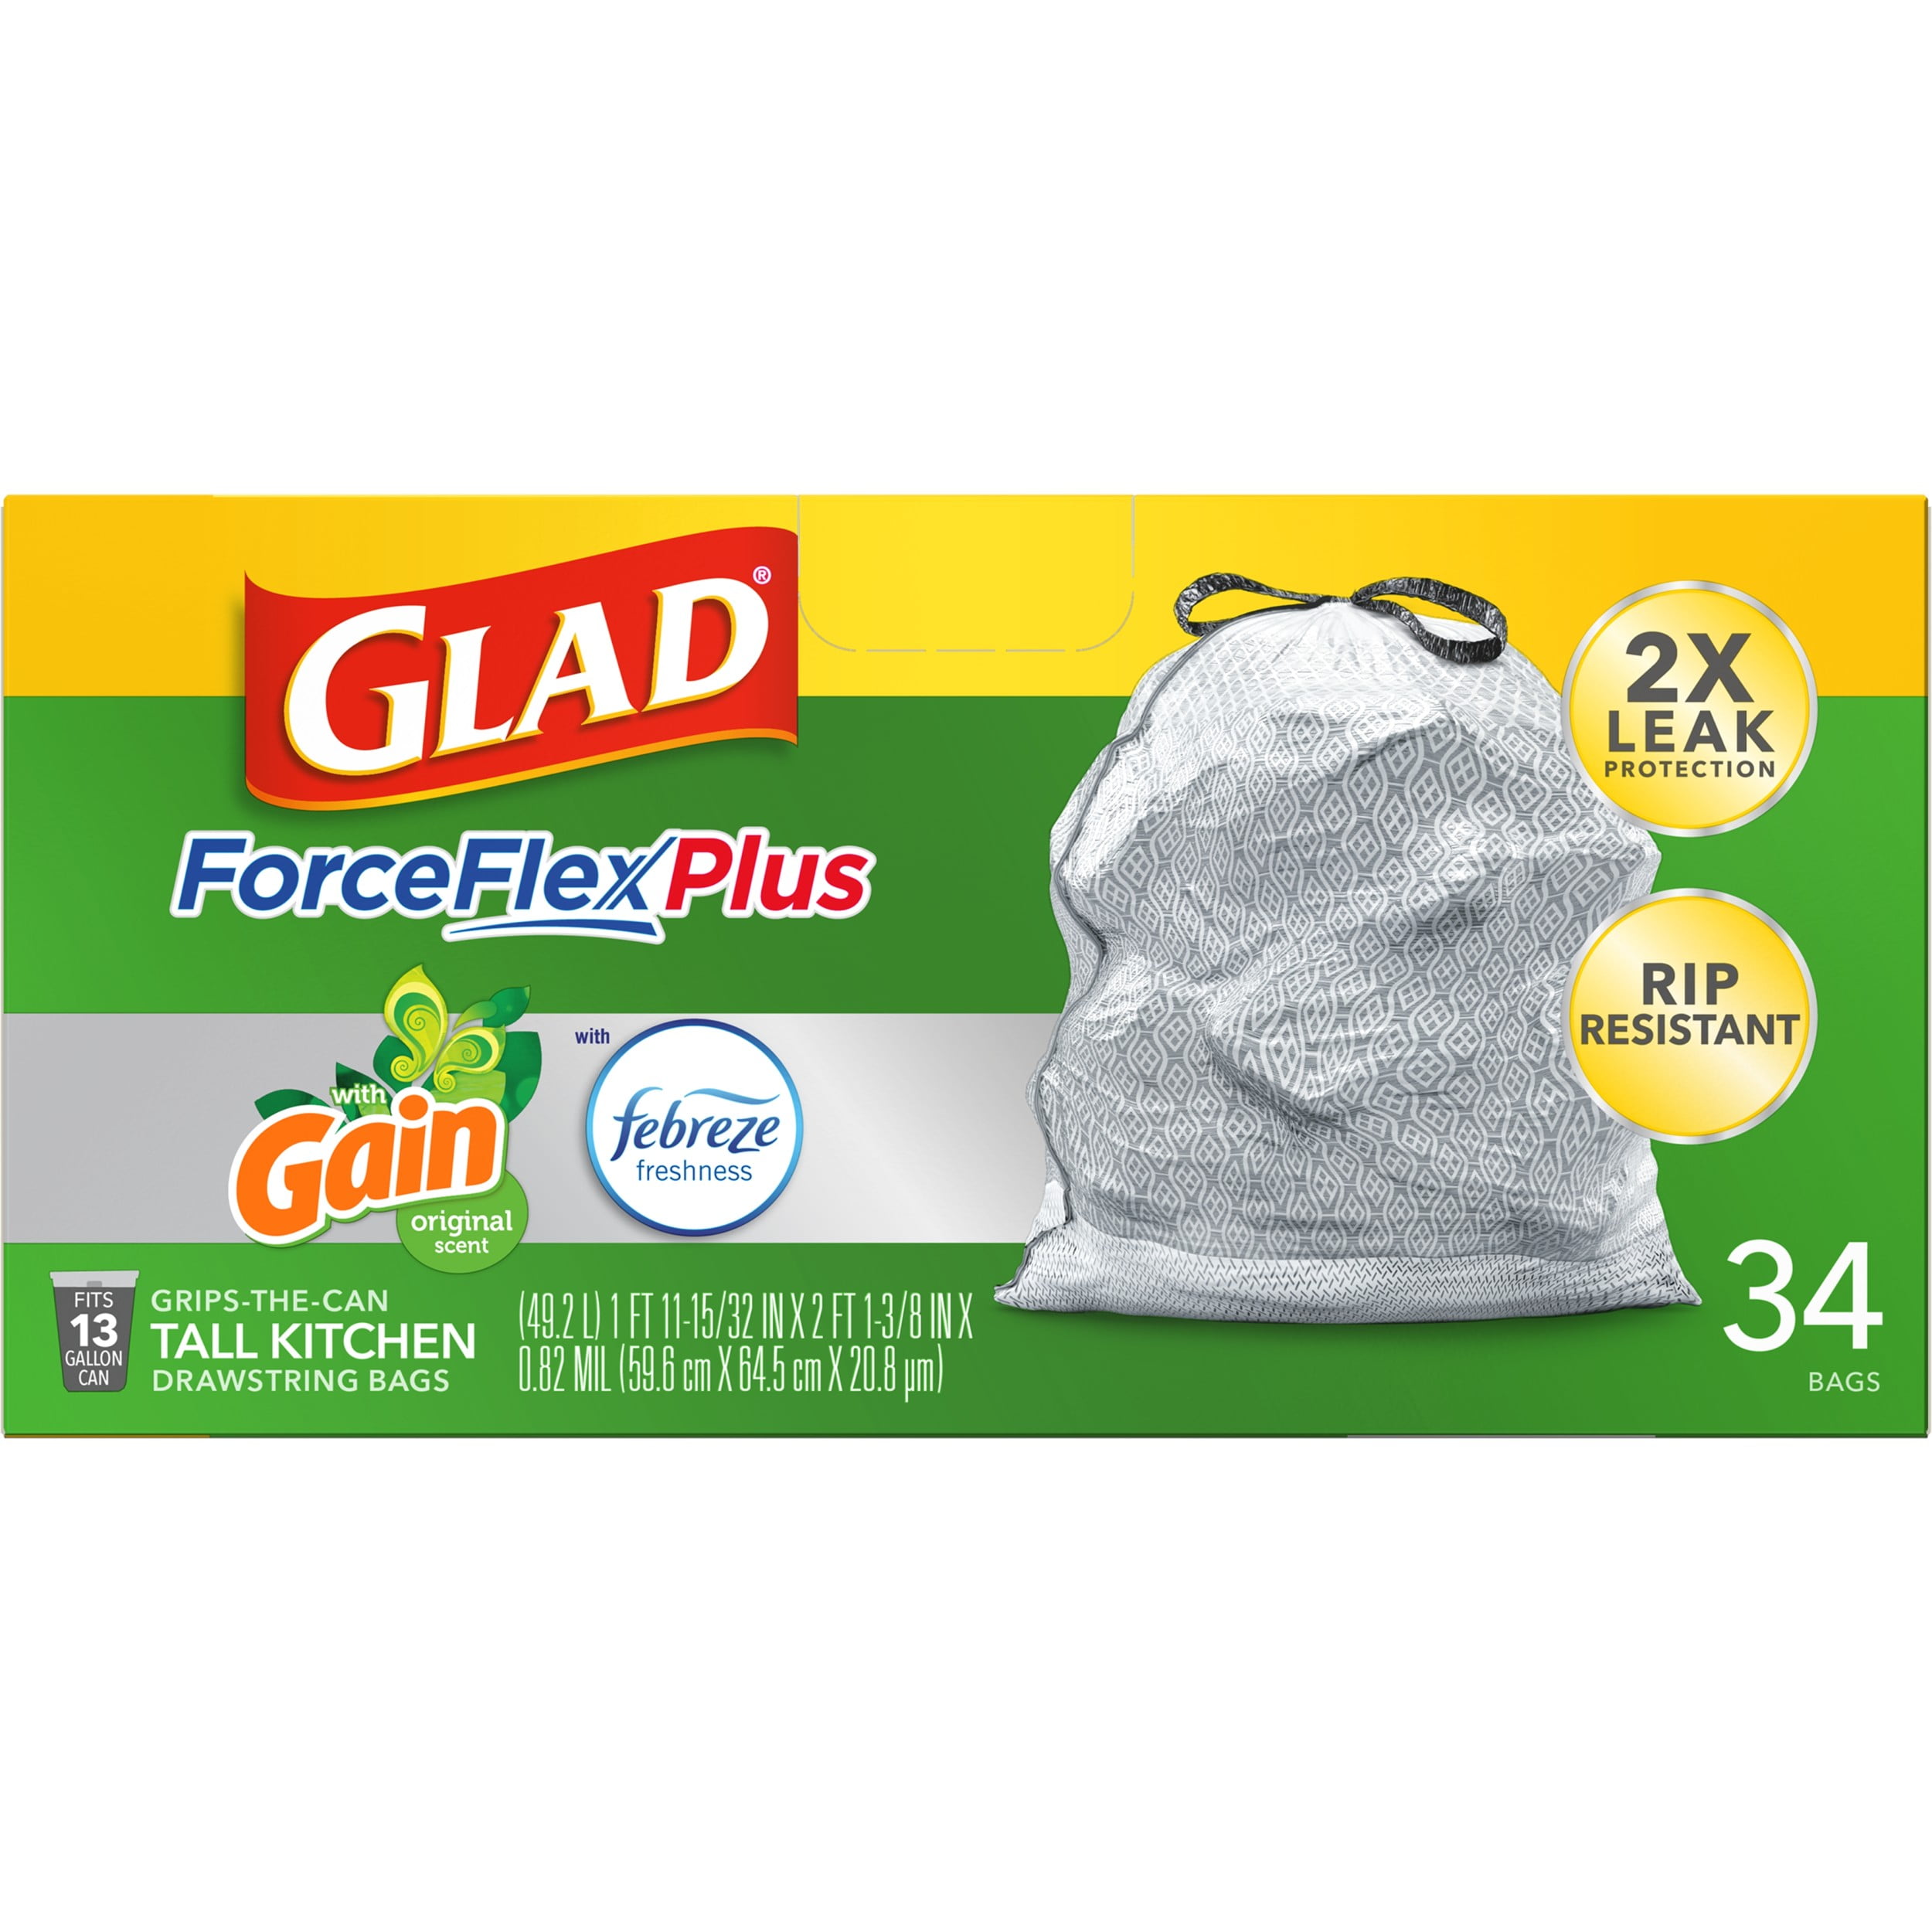 Glad ForceFlex Plus Kitchen Bags, Tall, Drawstring, Gain Original Scent, 13 Gallon - 34 bags